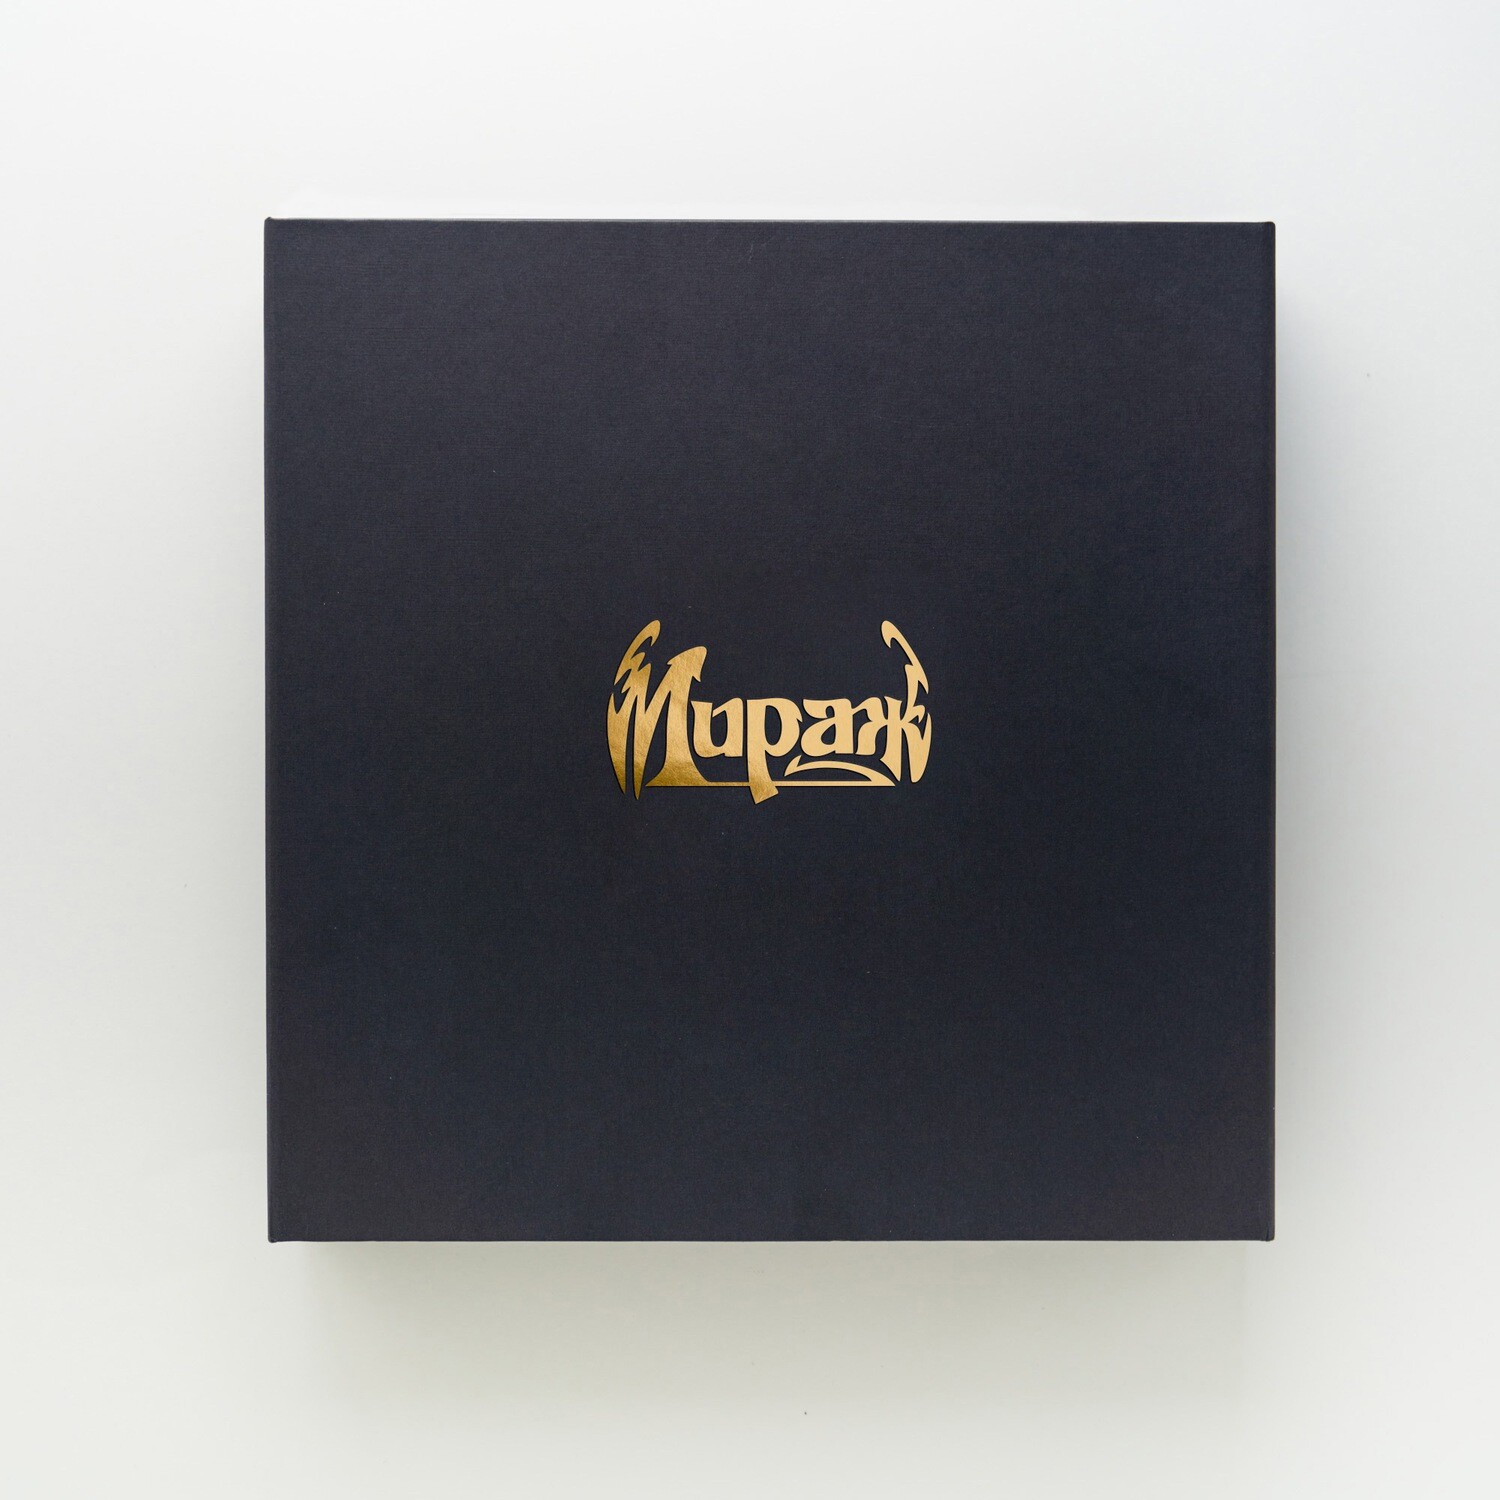 [PREORDER] Box-set: Mirage/Мираж — «Collection/Коллекция» (1987-1991/2023) [4LP Deluxe Box Set]